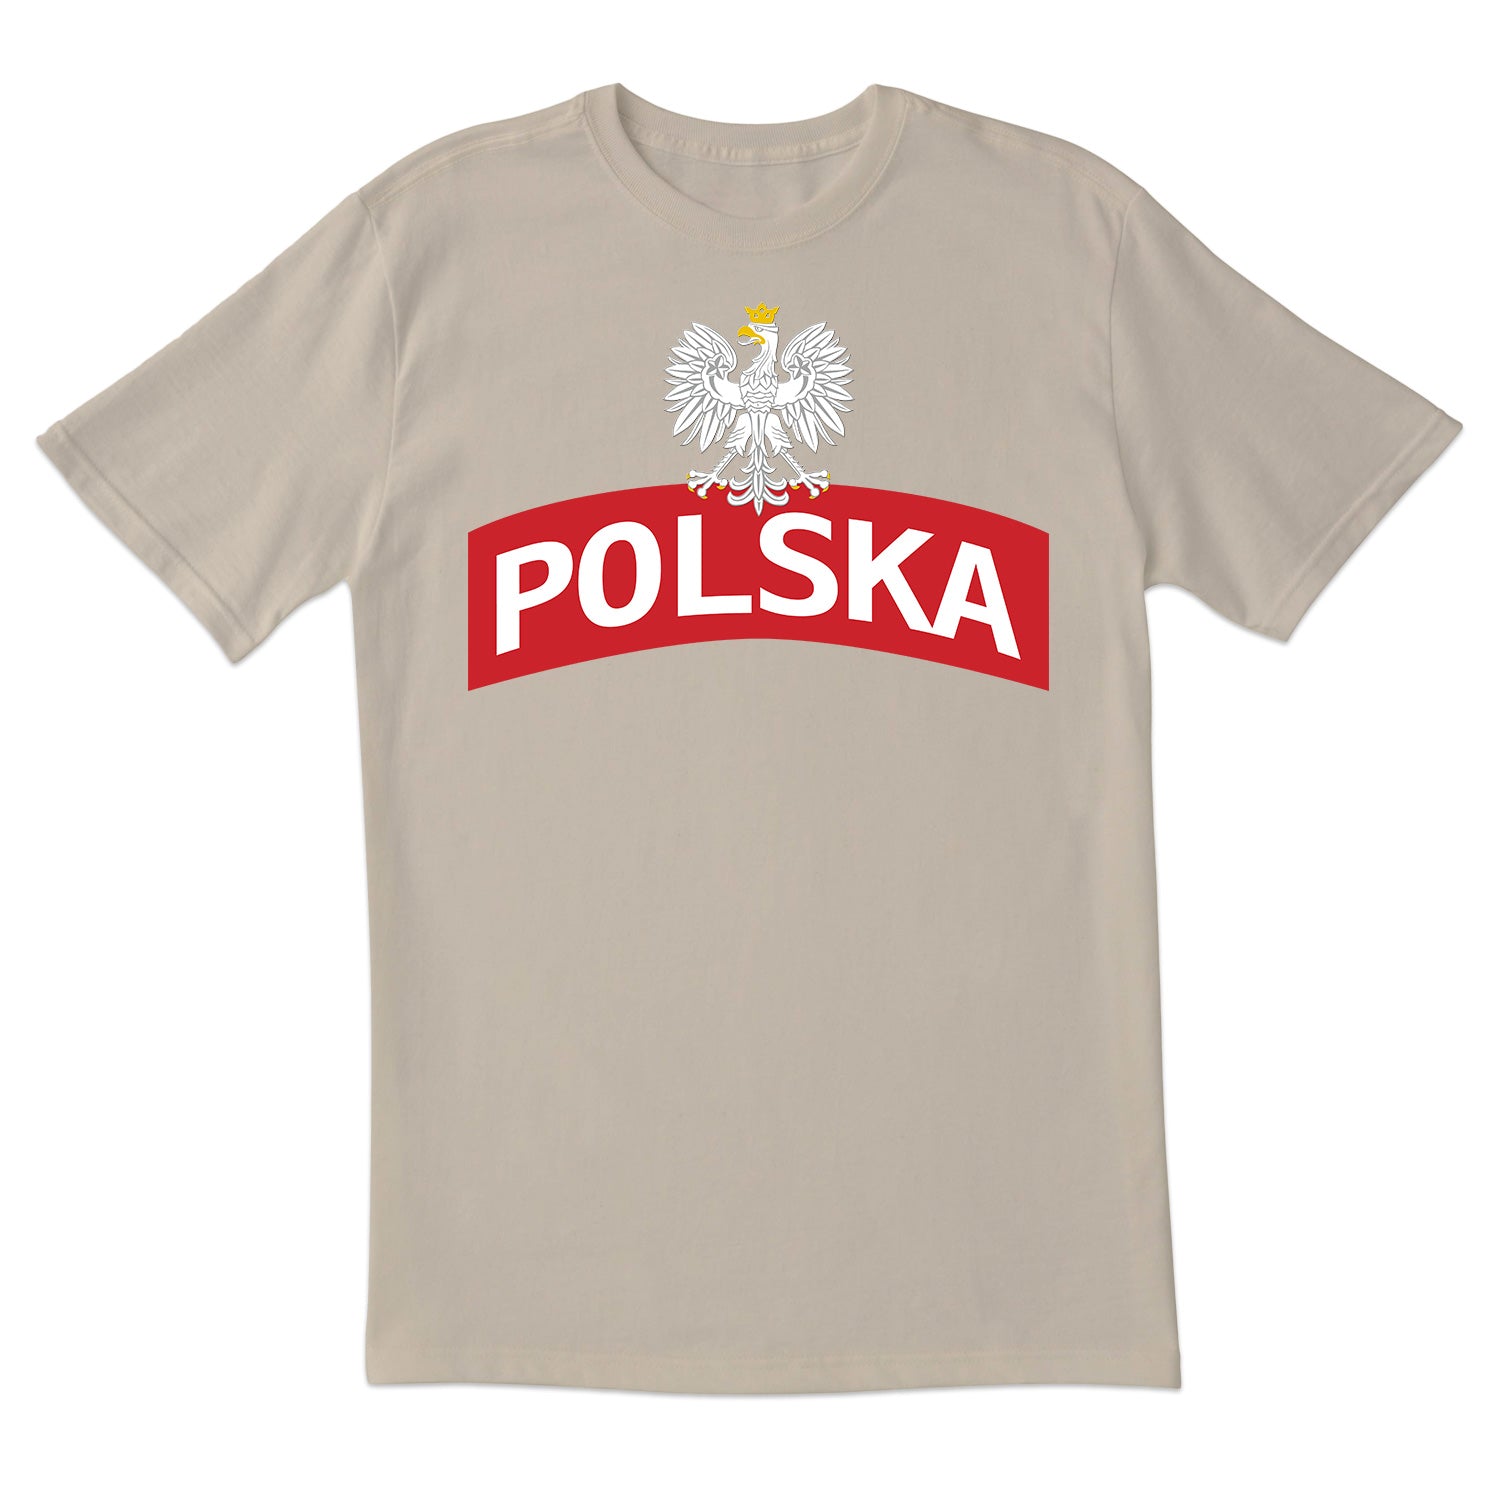 White Eagle Polska Short Sleeve Tshirt